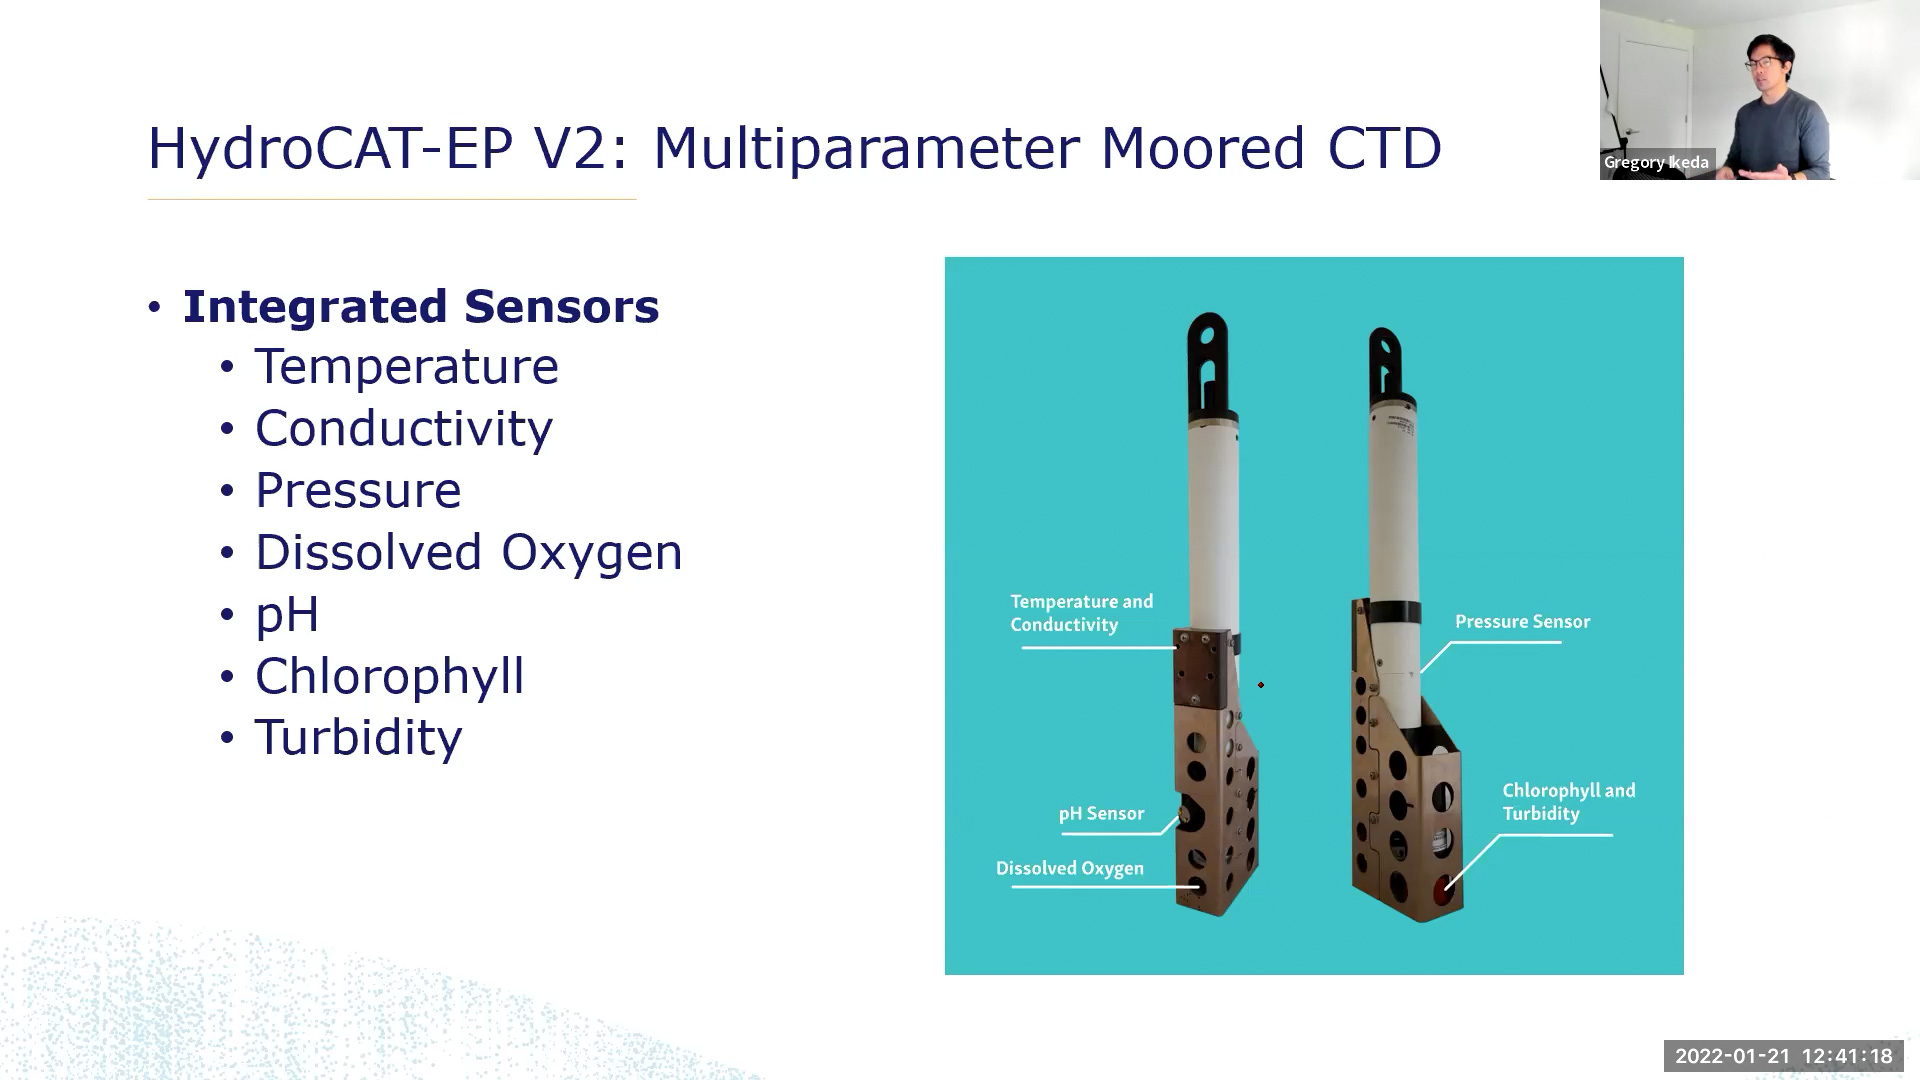 CTDs in screen grab from Seabird Scientific presentation